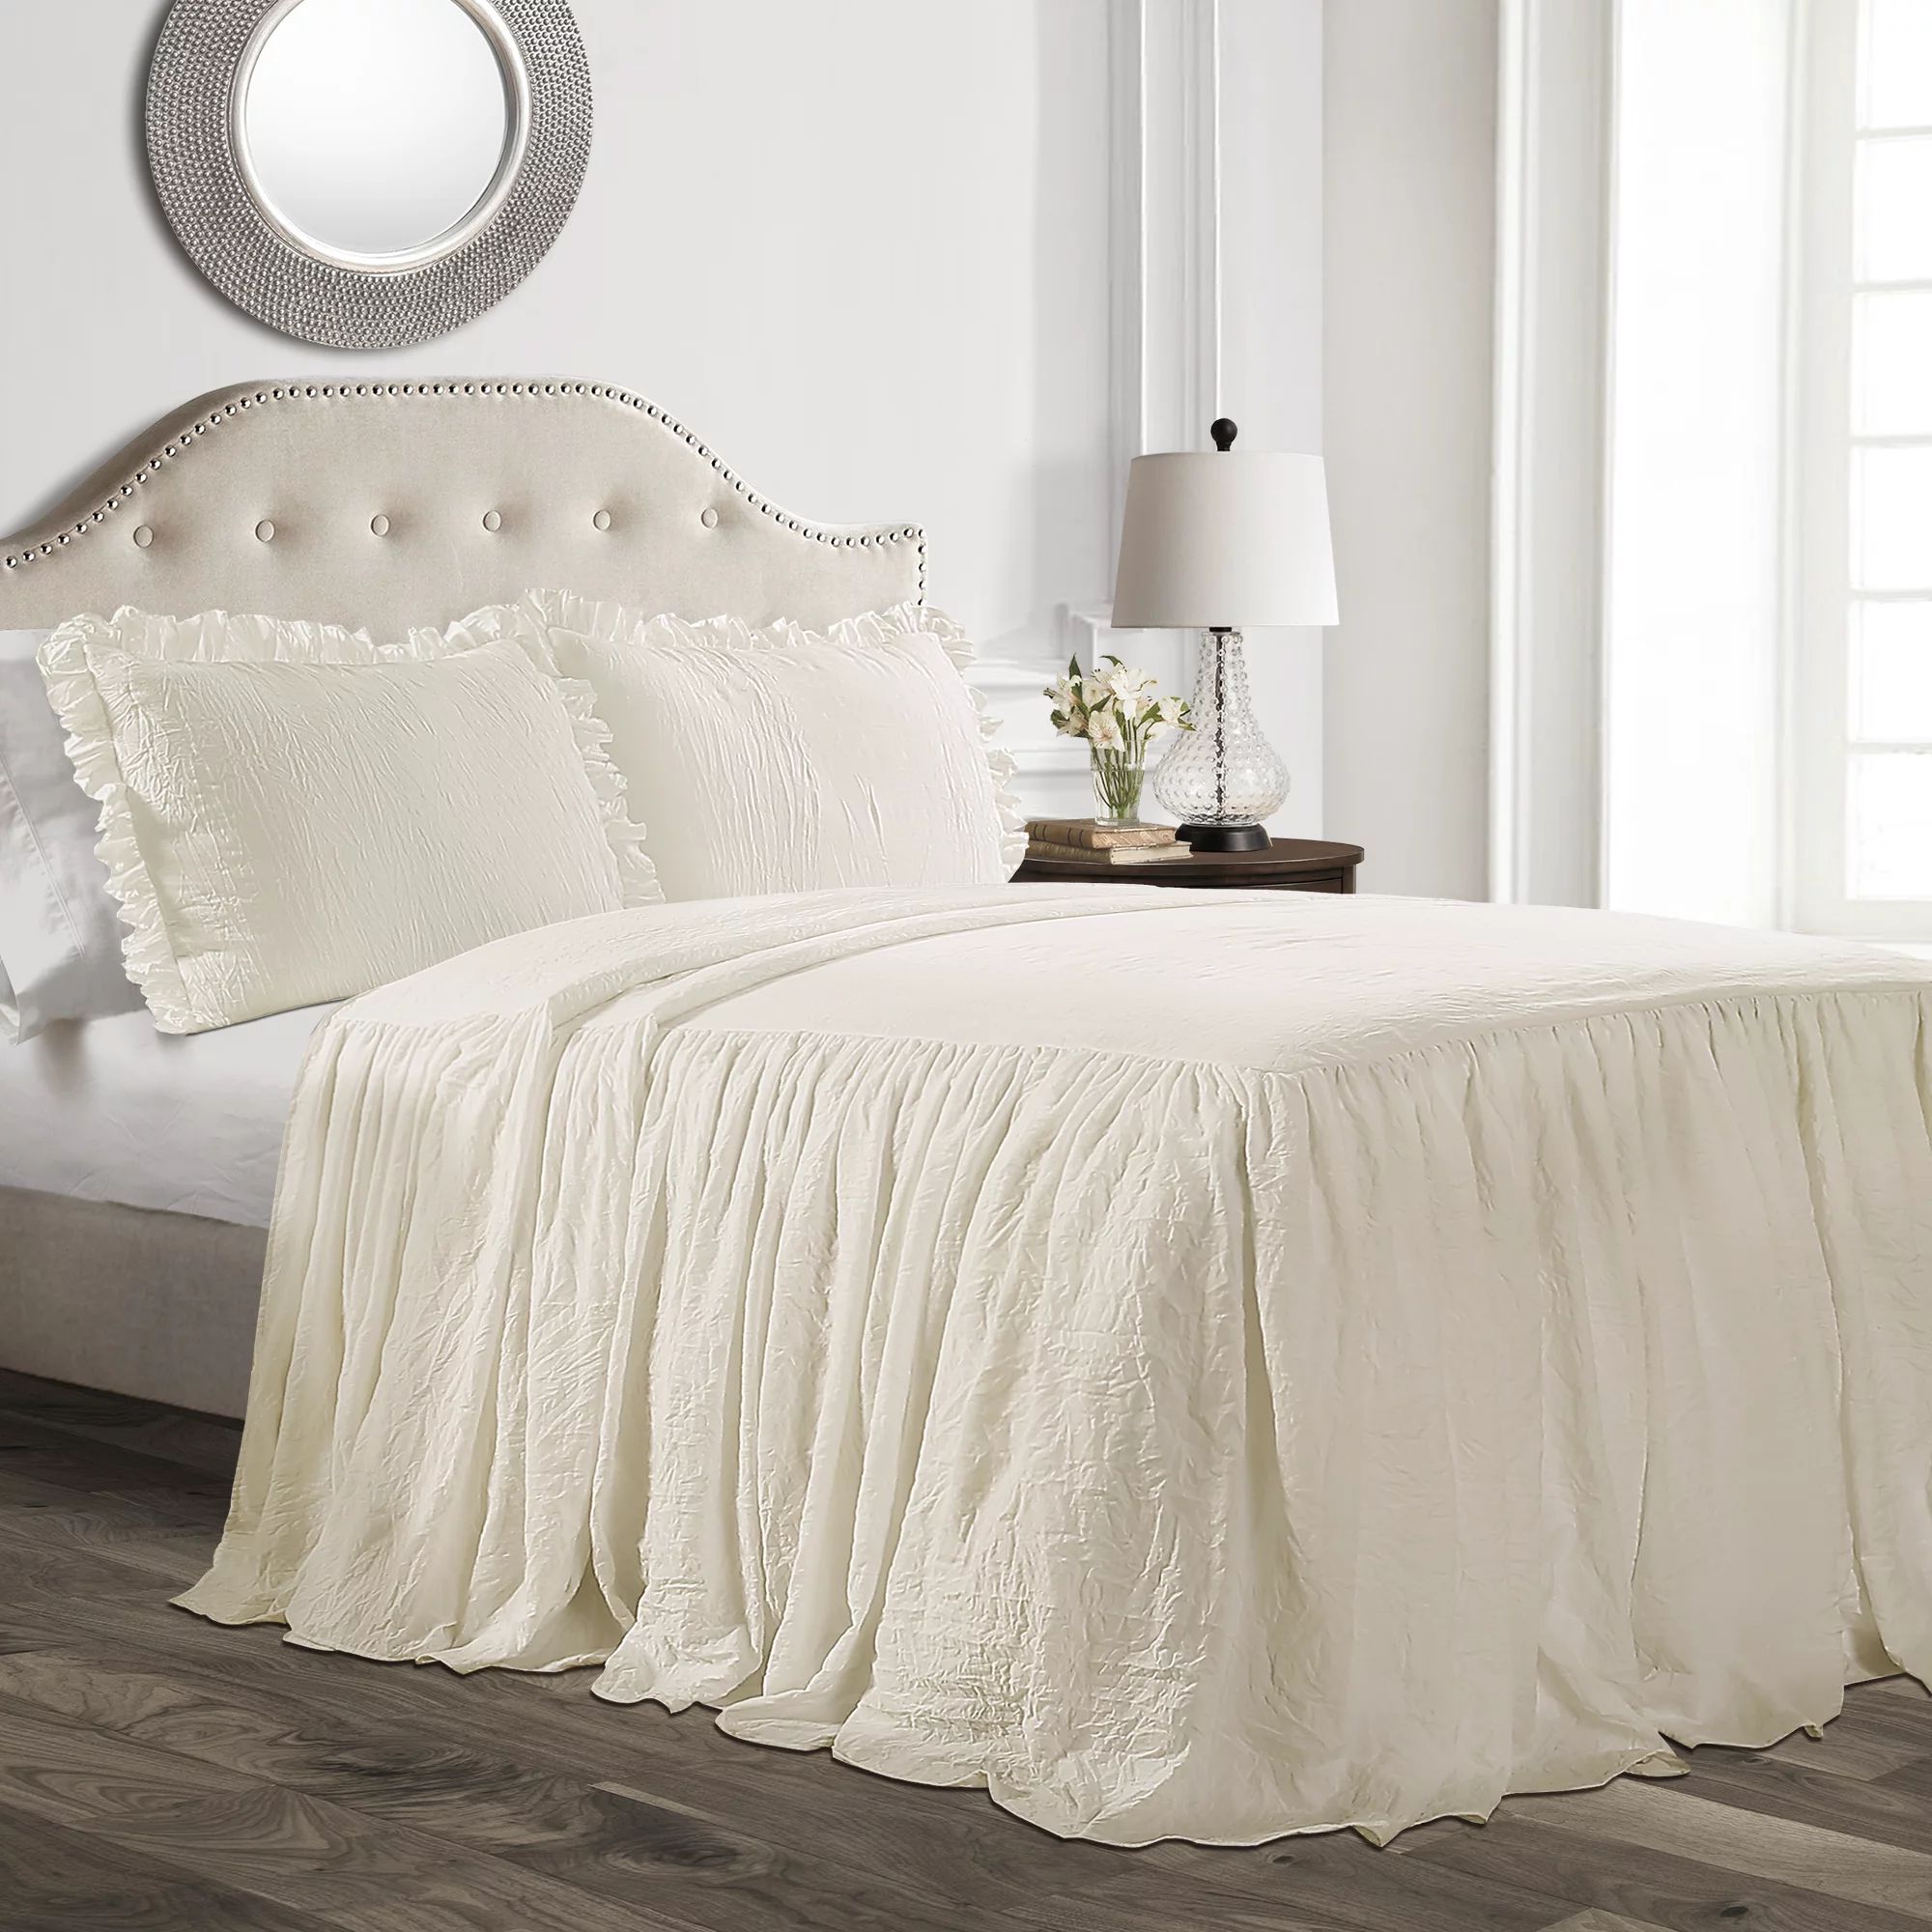 Lush Decor Ruffle Skirt Polyester Bedspread, Queen, Ivory, 3-Pc Set | Walmart (US)